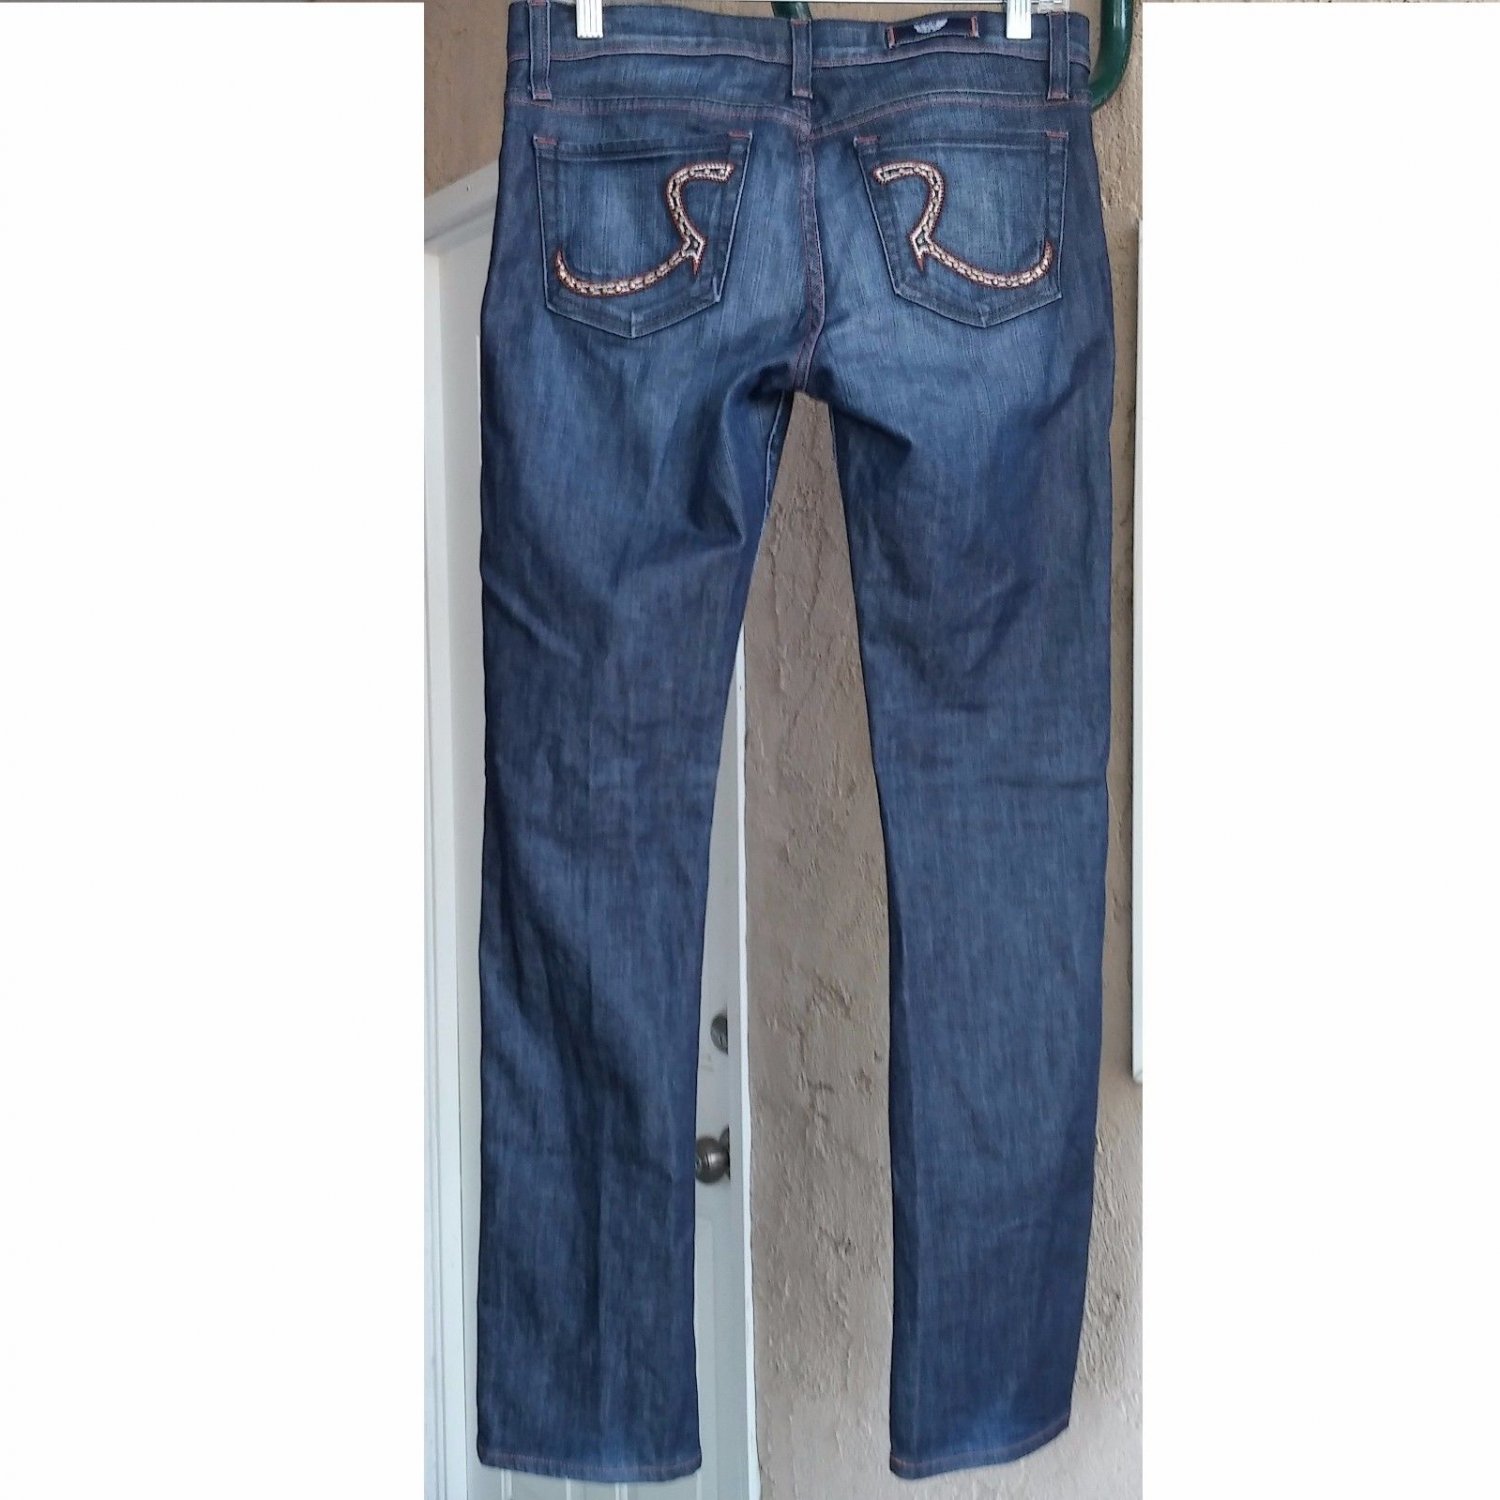 ROCK & REPUBLIC KASANDRA Slim Straight Women's Jeans -- Size 27 x 31